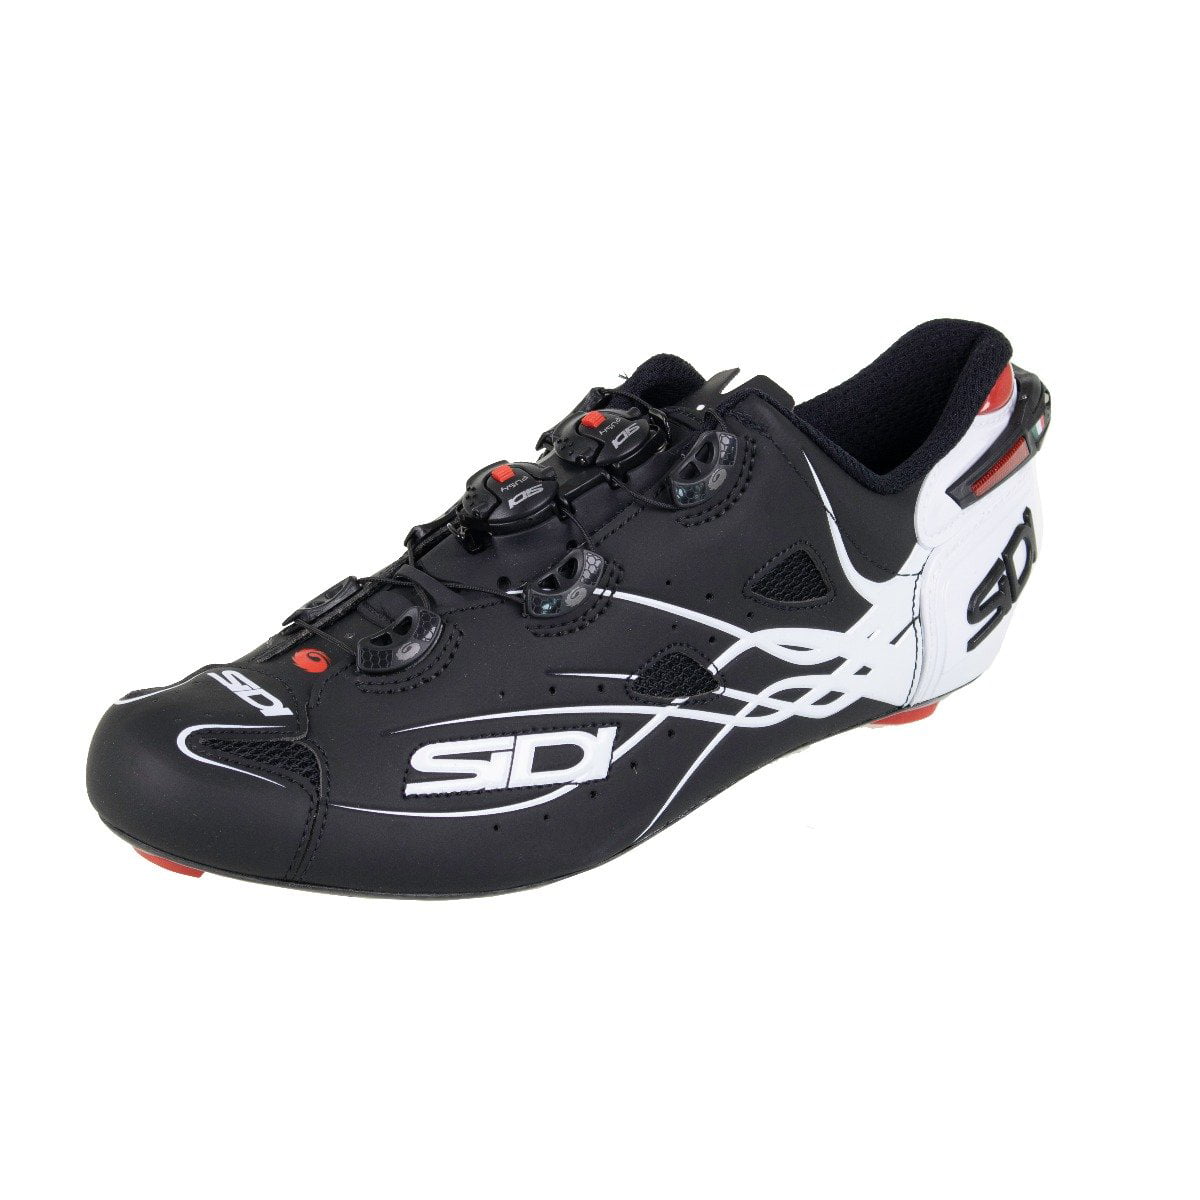 Matt Black/White SIDI TIGER Carbon MTB Cycling Shoes 